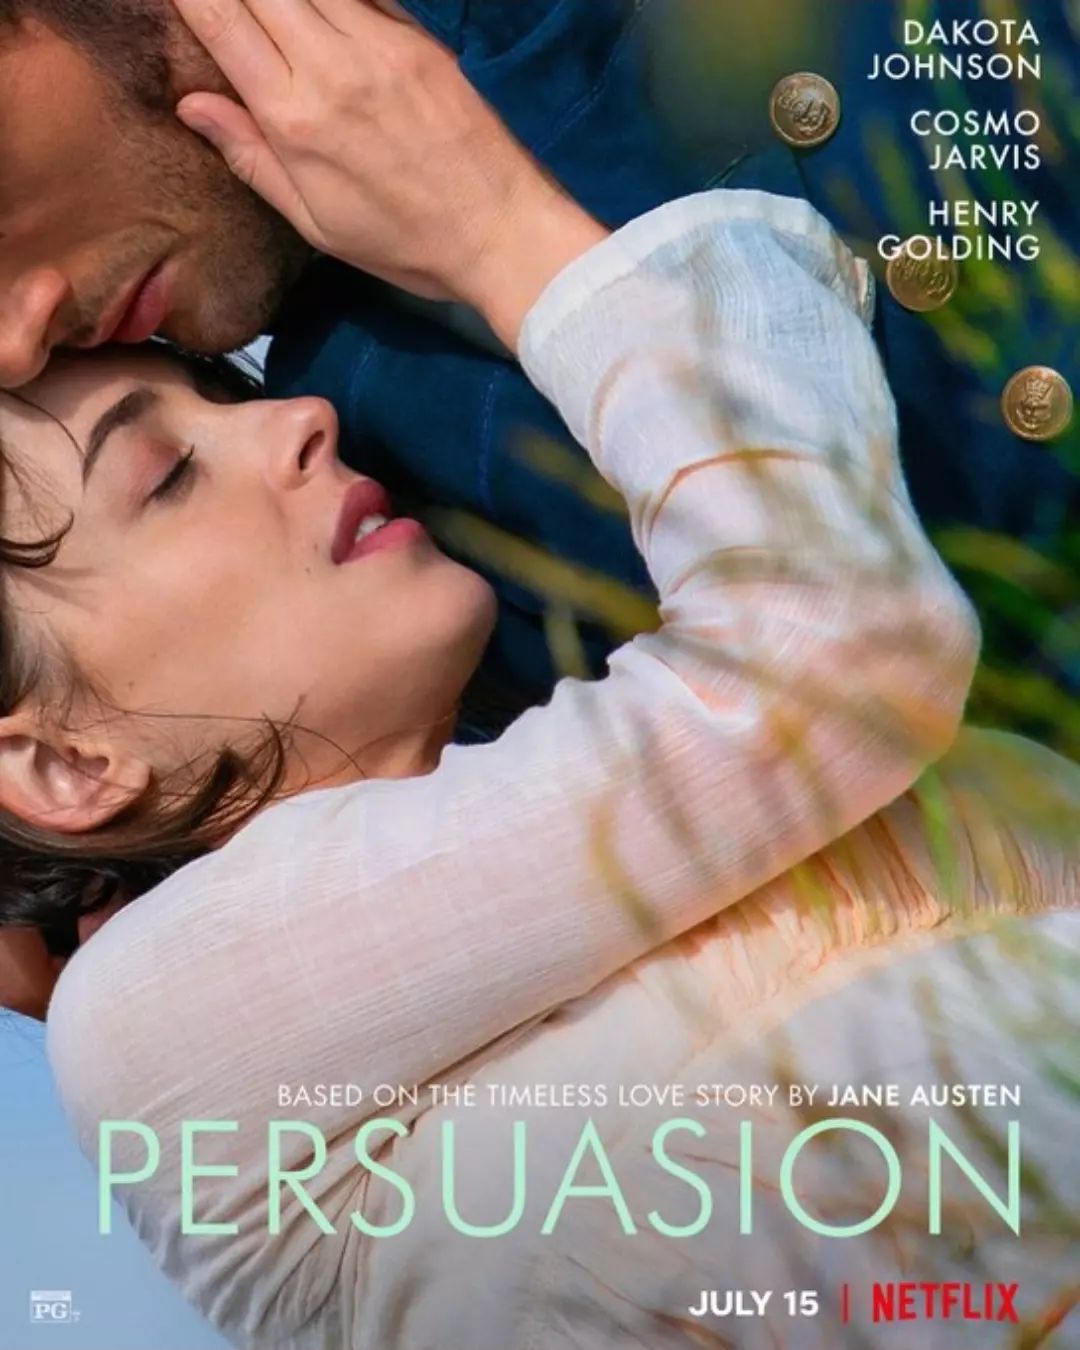 Poster Persuasion 2022 de Netflix, con Dakota Johnson, Henry Golding y Cosmo Jarvis